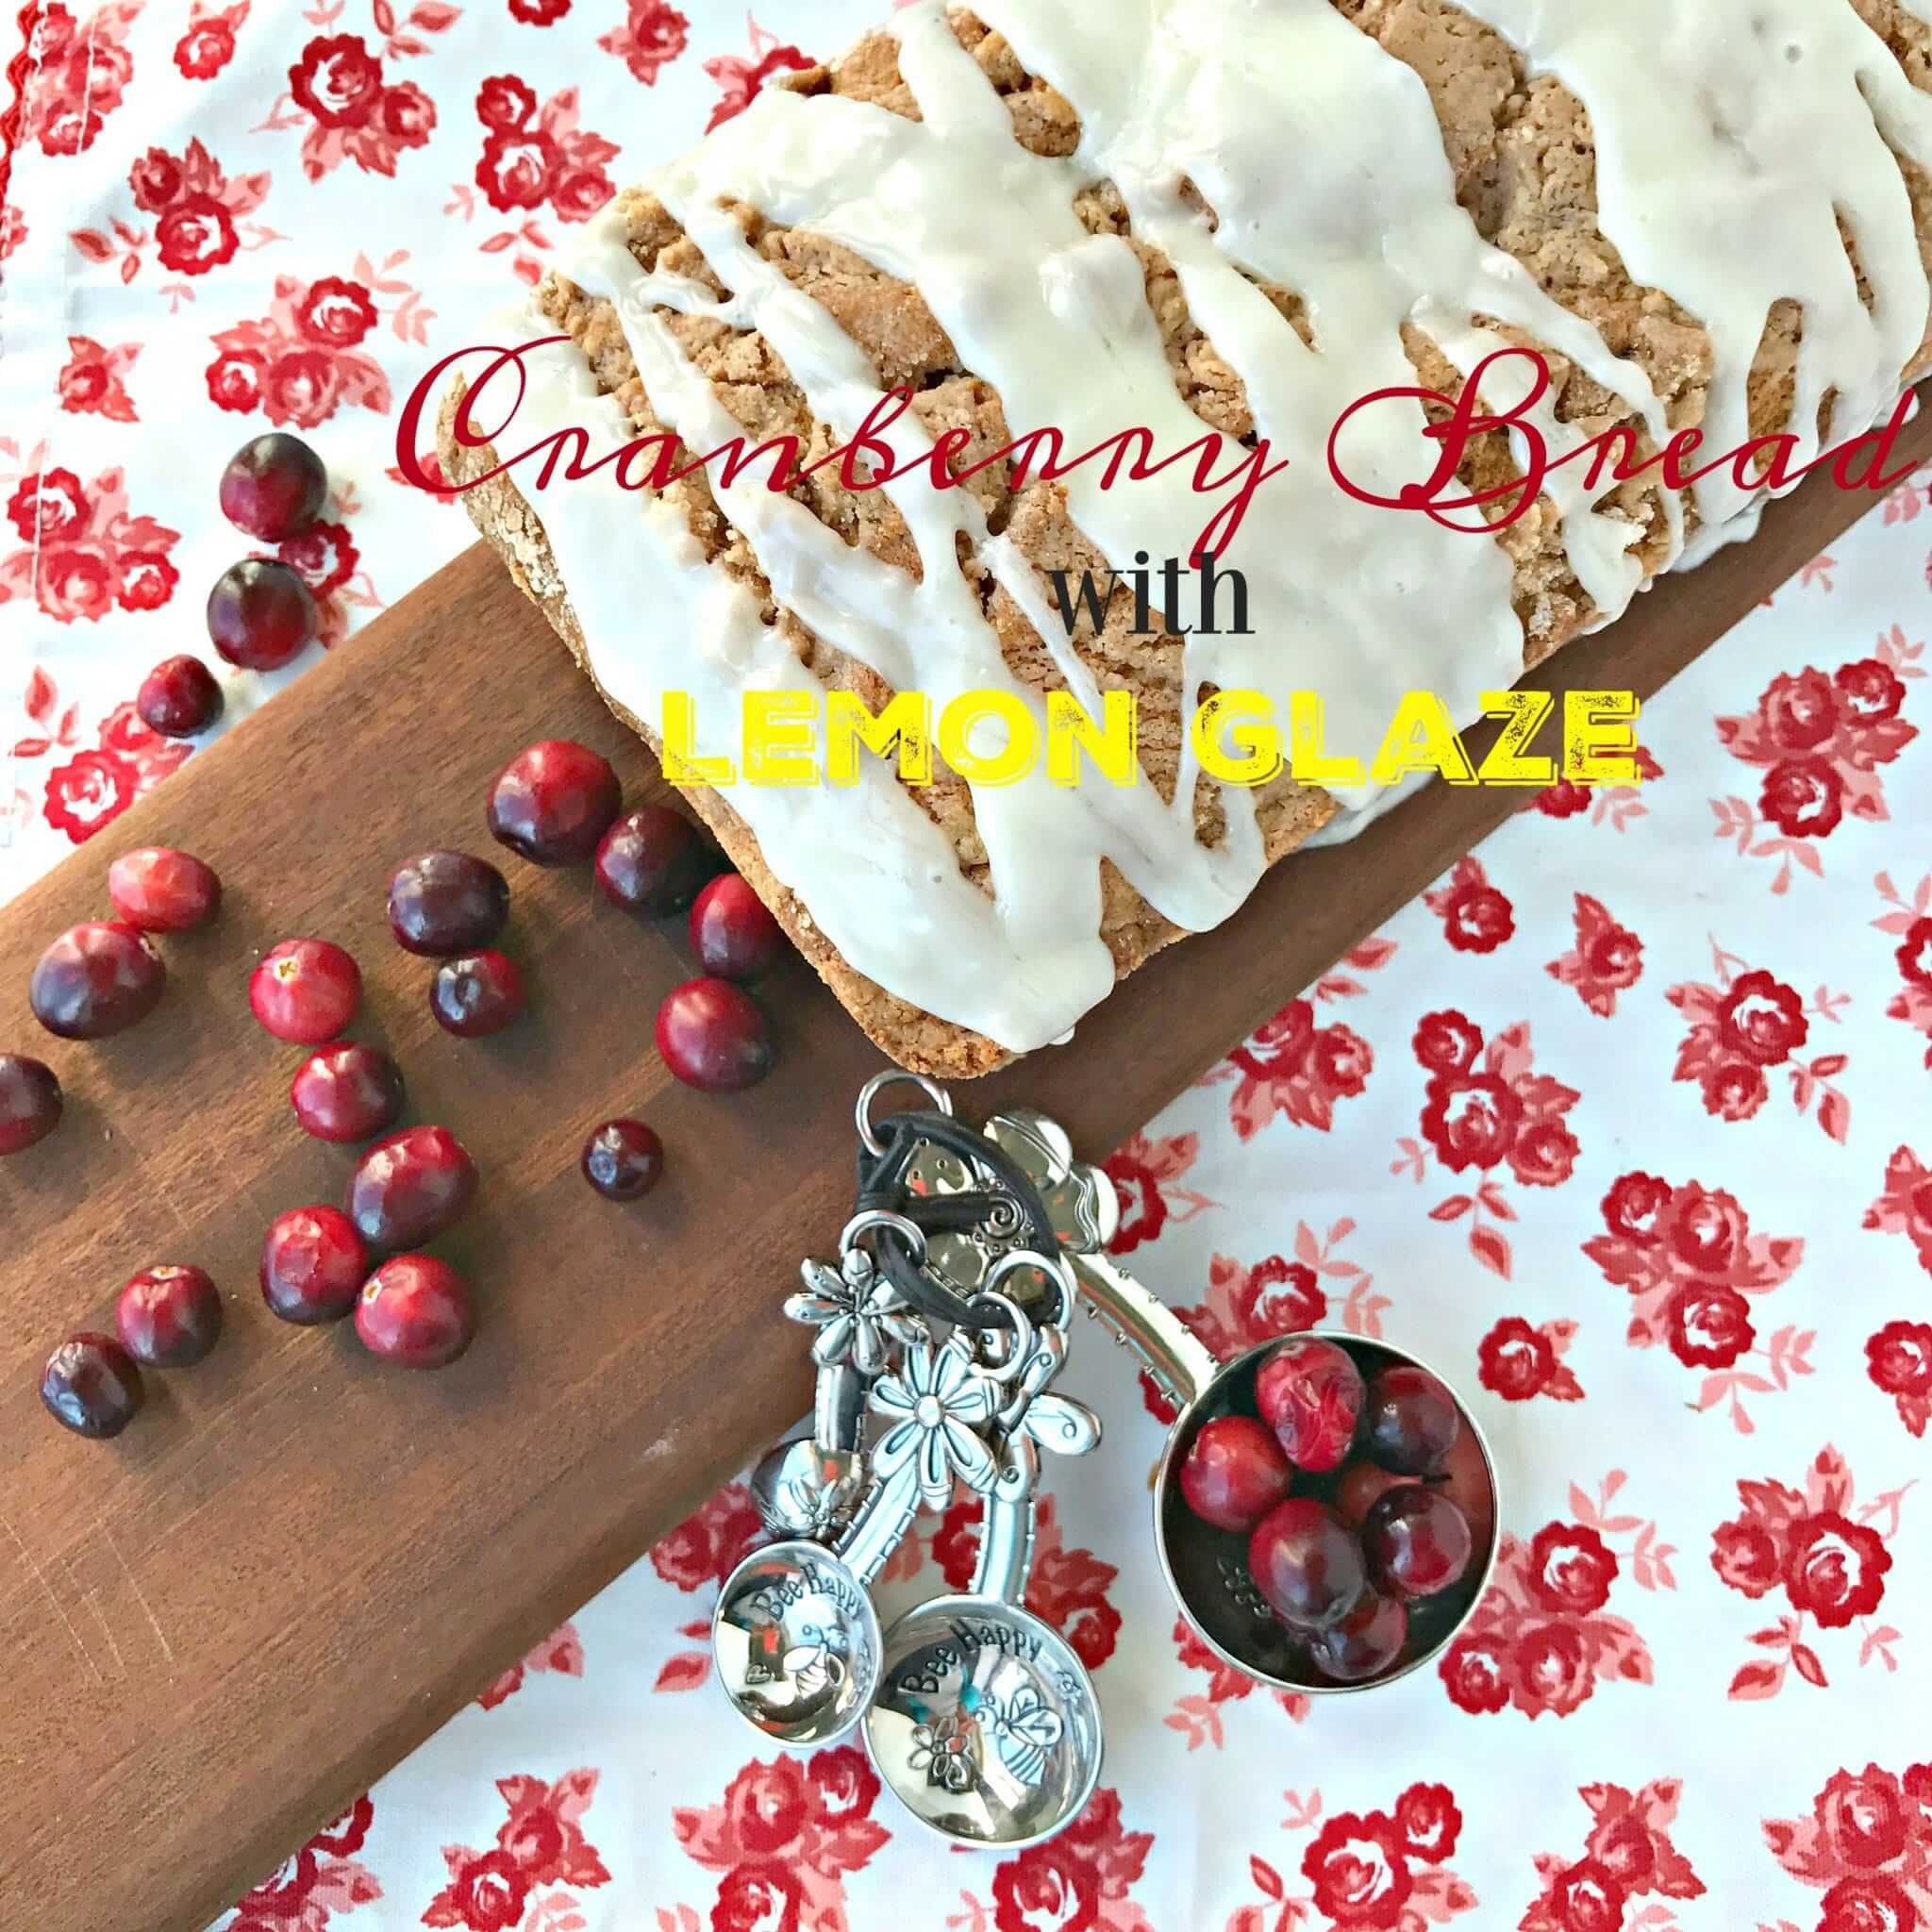 cranberry-bread-with-lemon-glaze